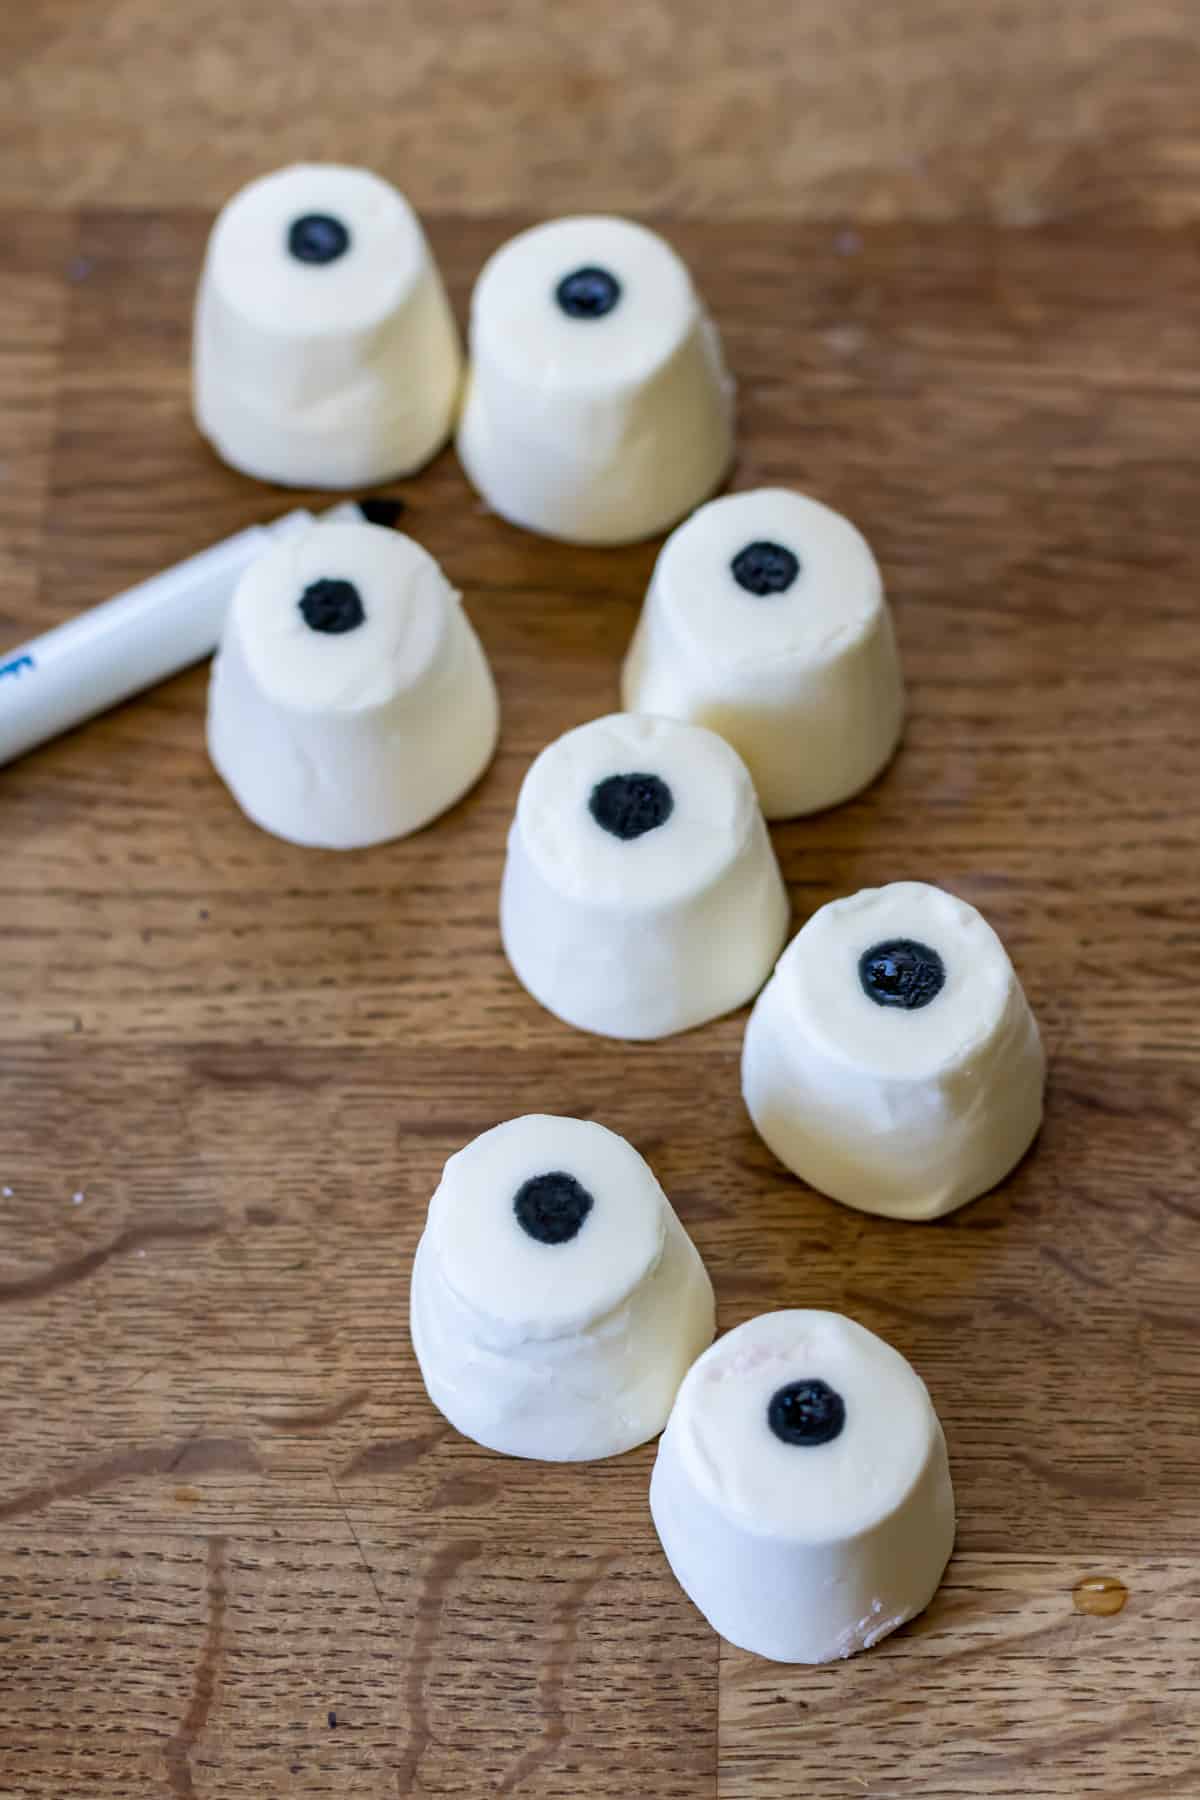 Making black circles on marshmallows to look like eyes.